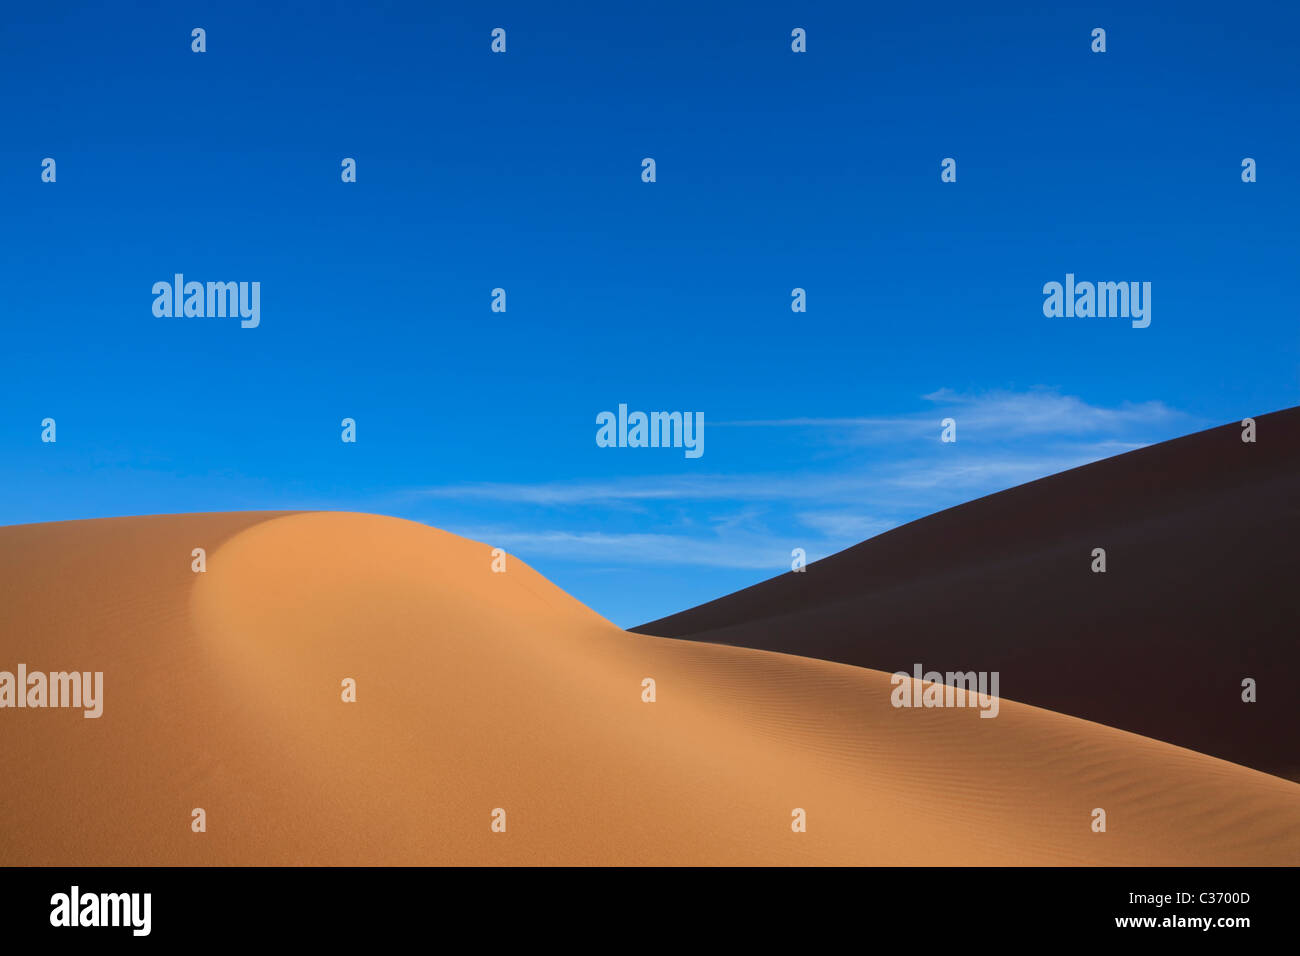 Desert sand dunes Stock Photo